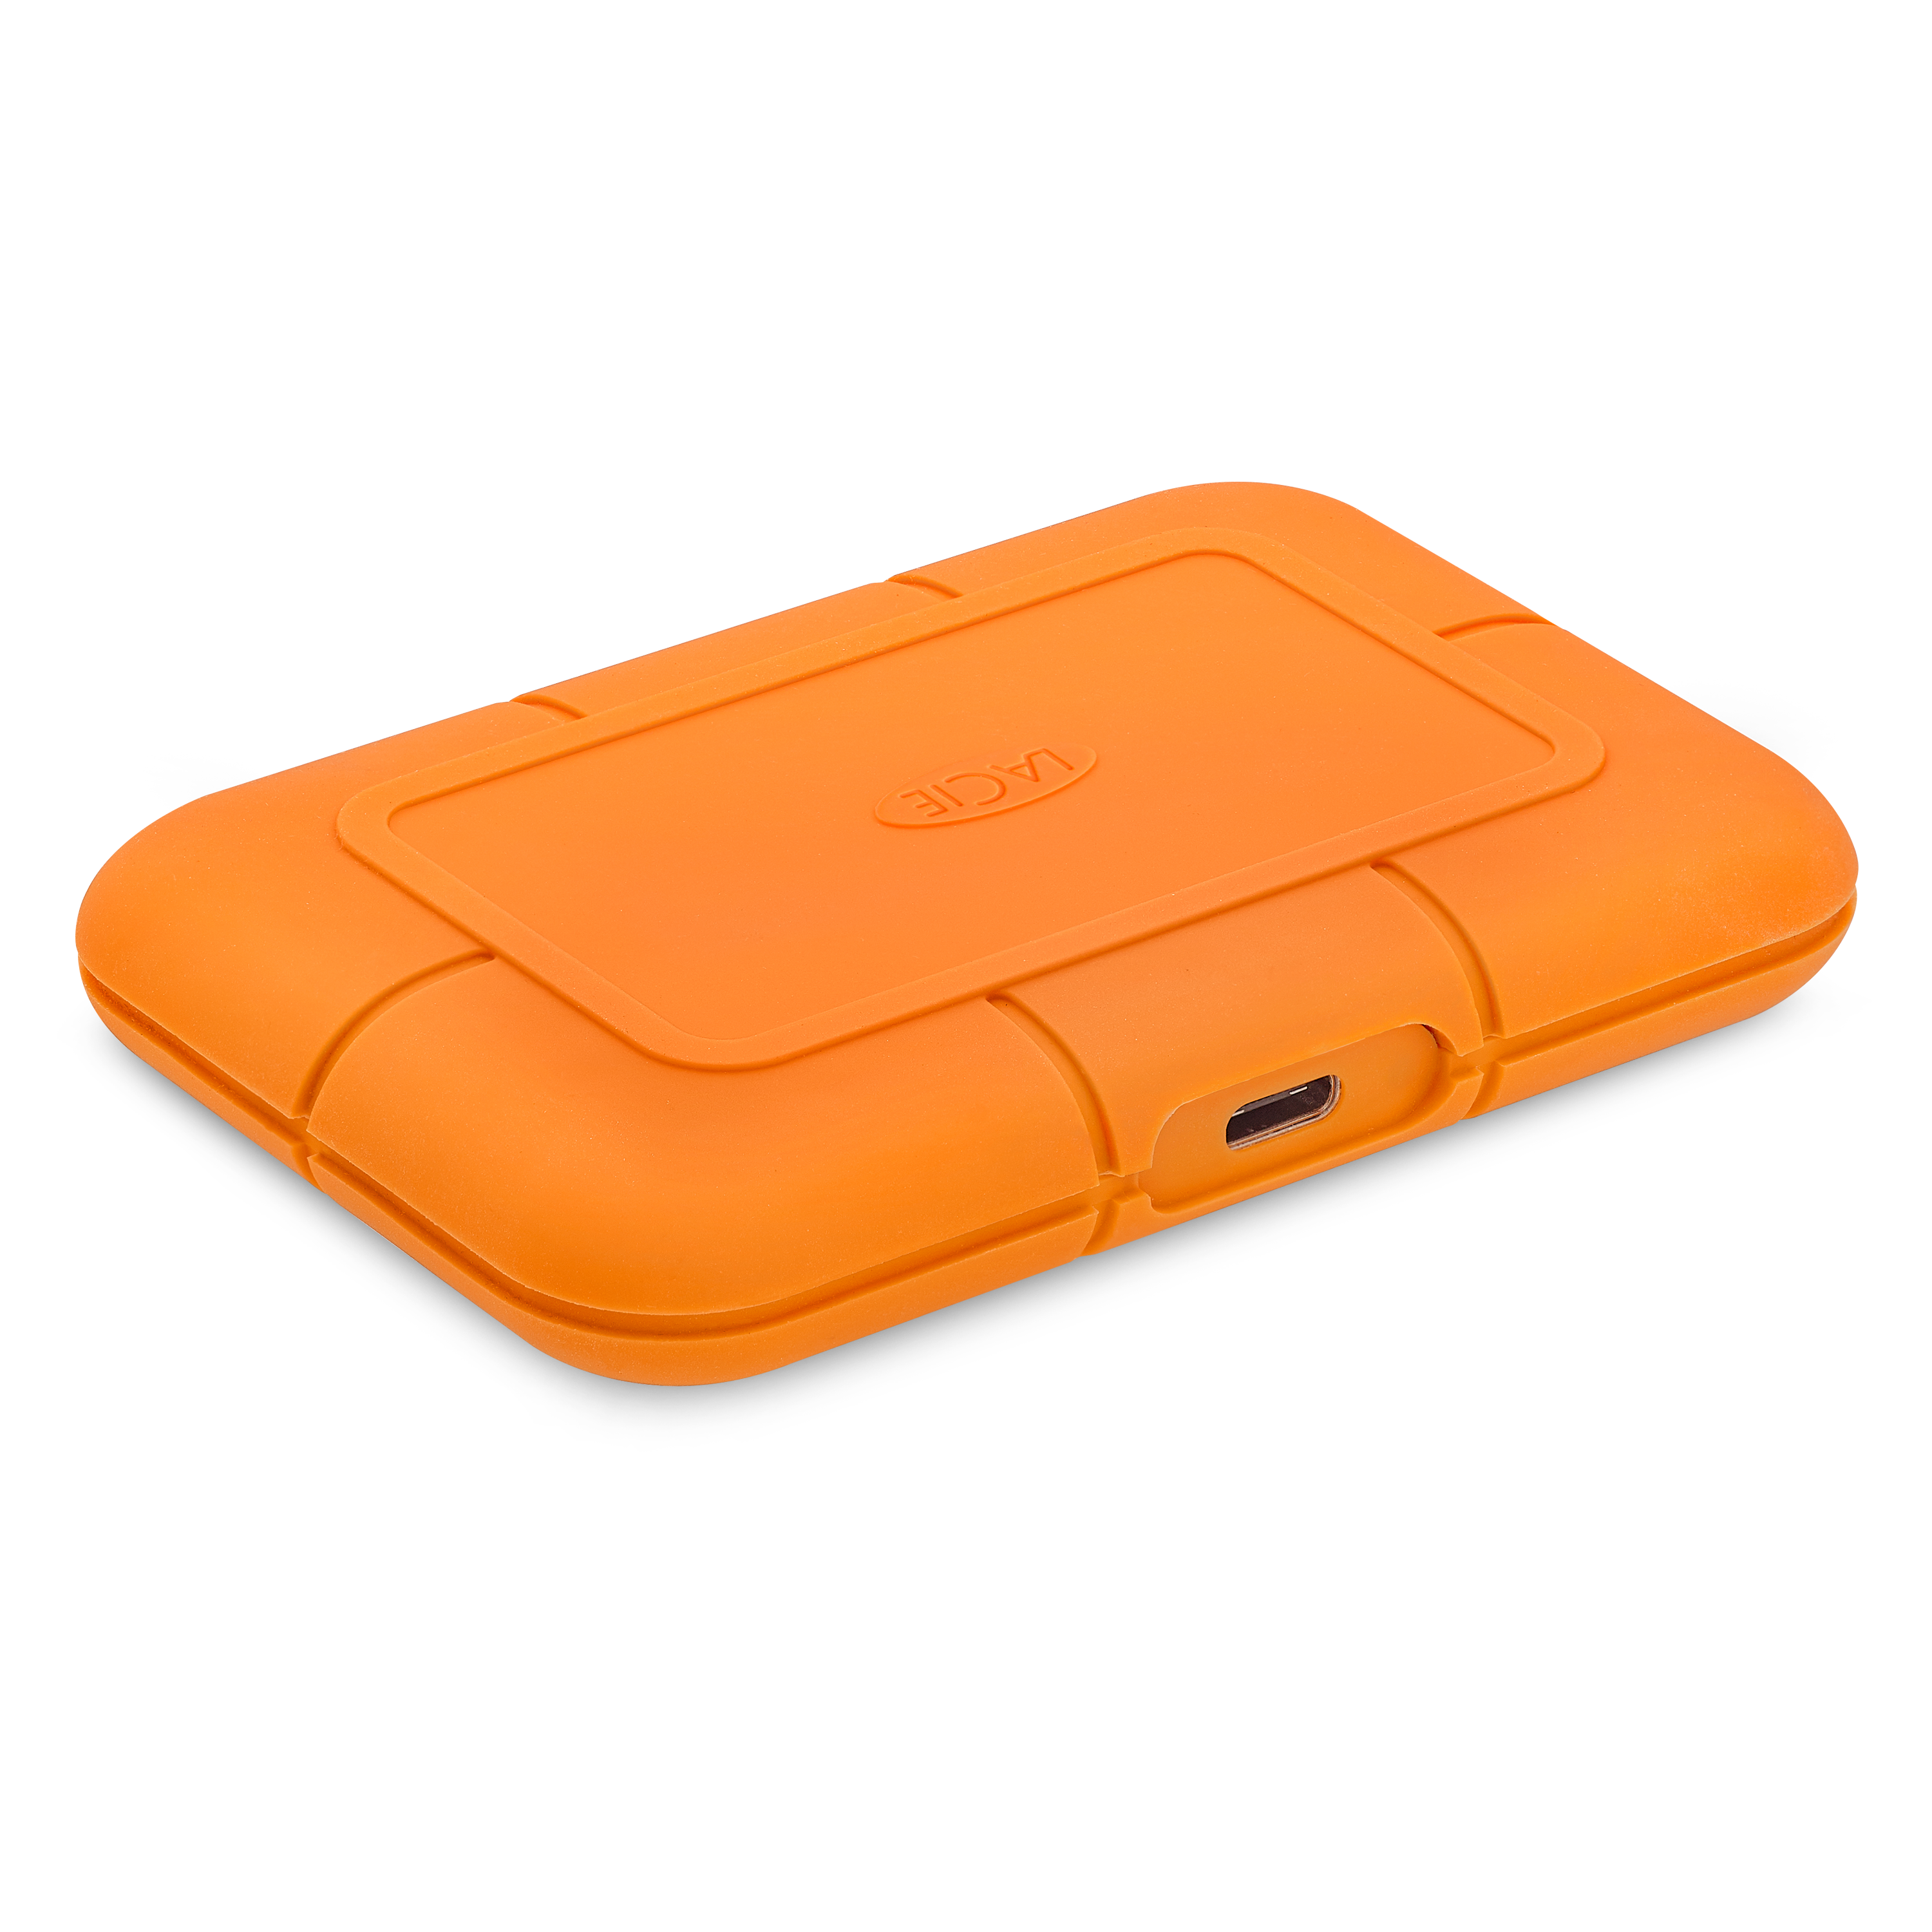 LACIE Rugged SSD GB Festplatte, SSD, 500 extern, Orange